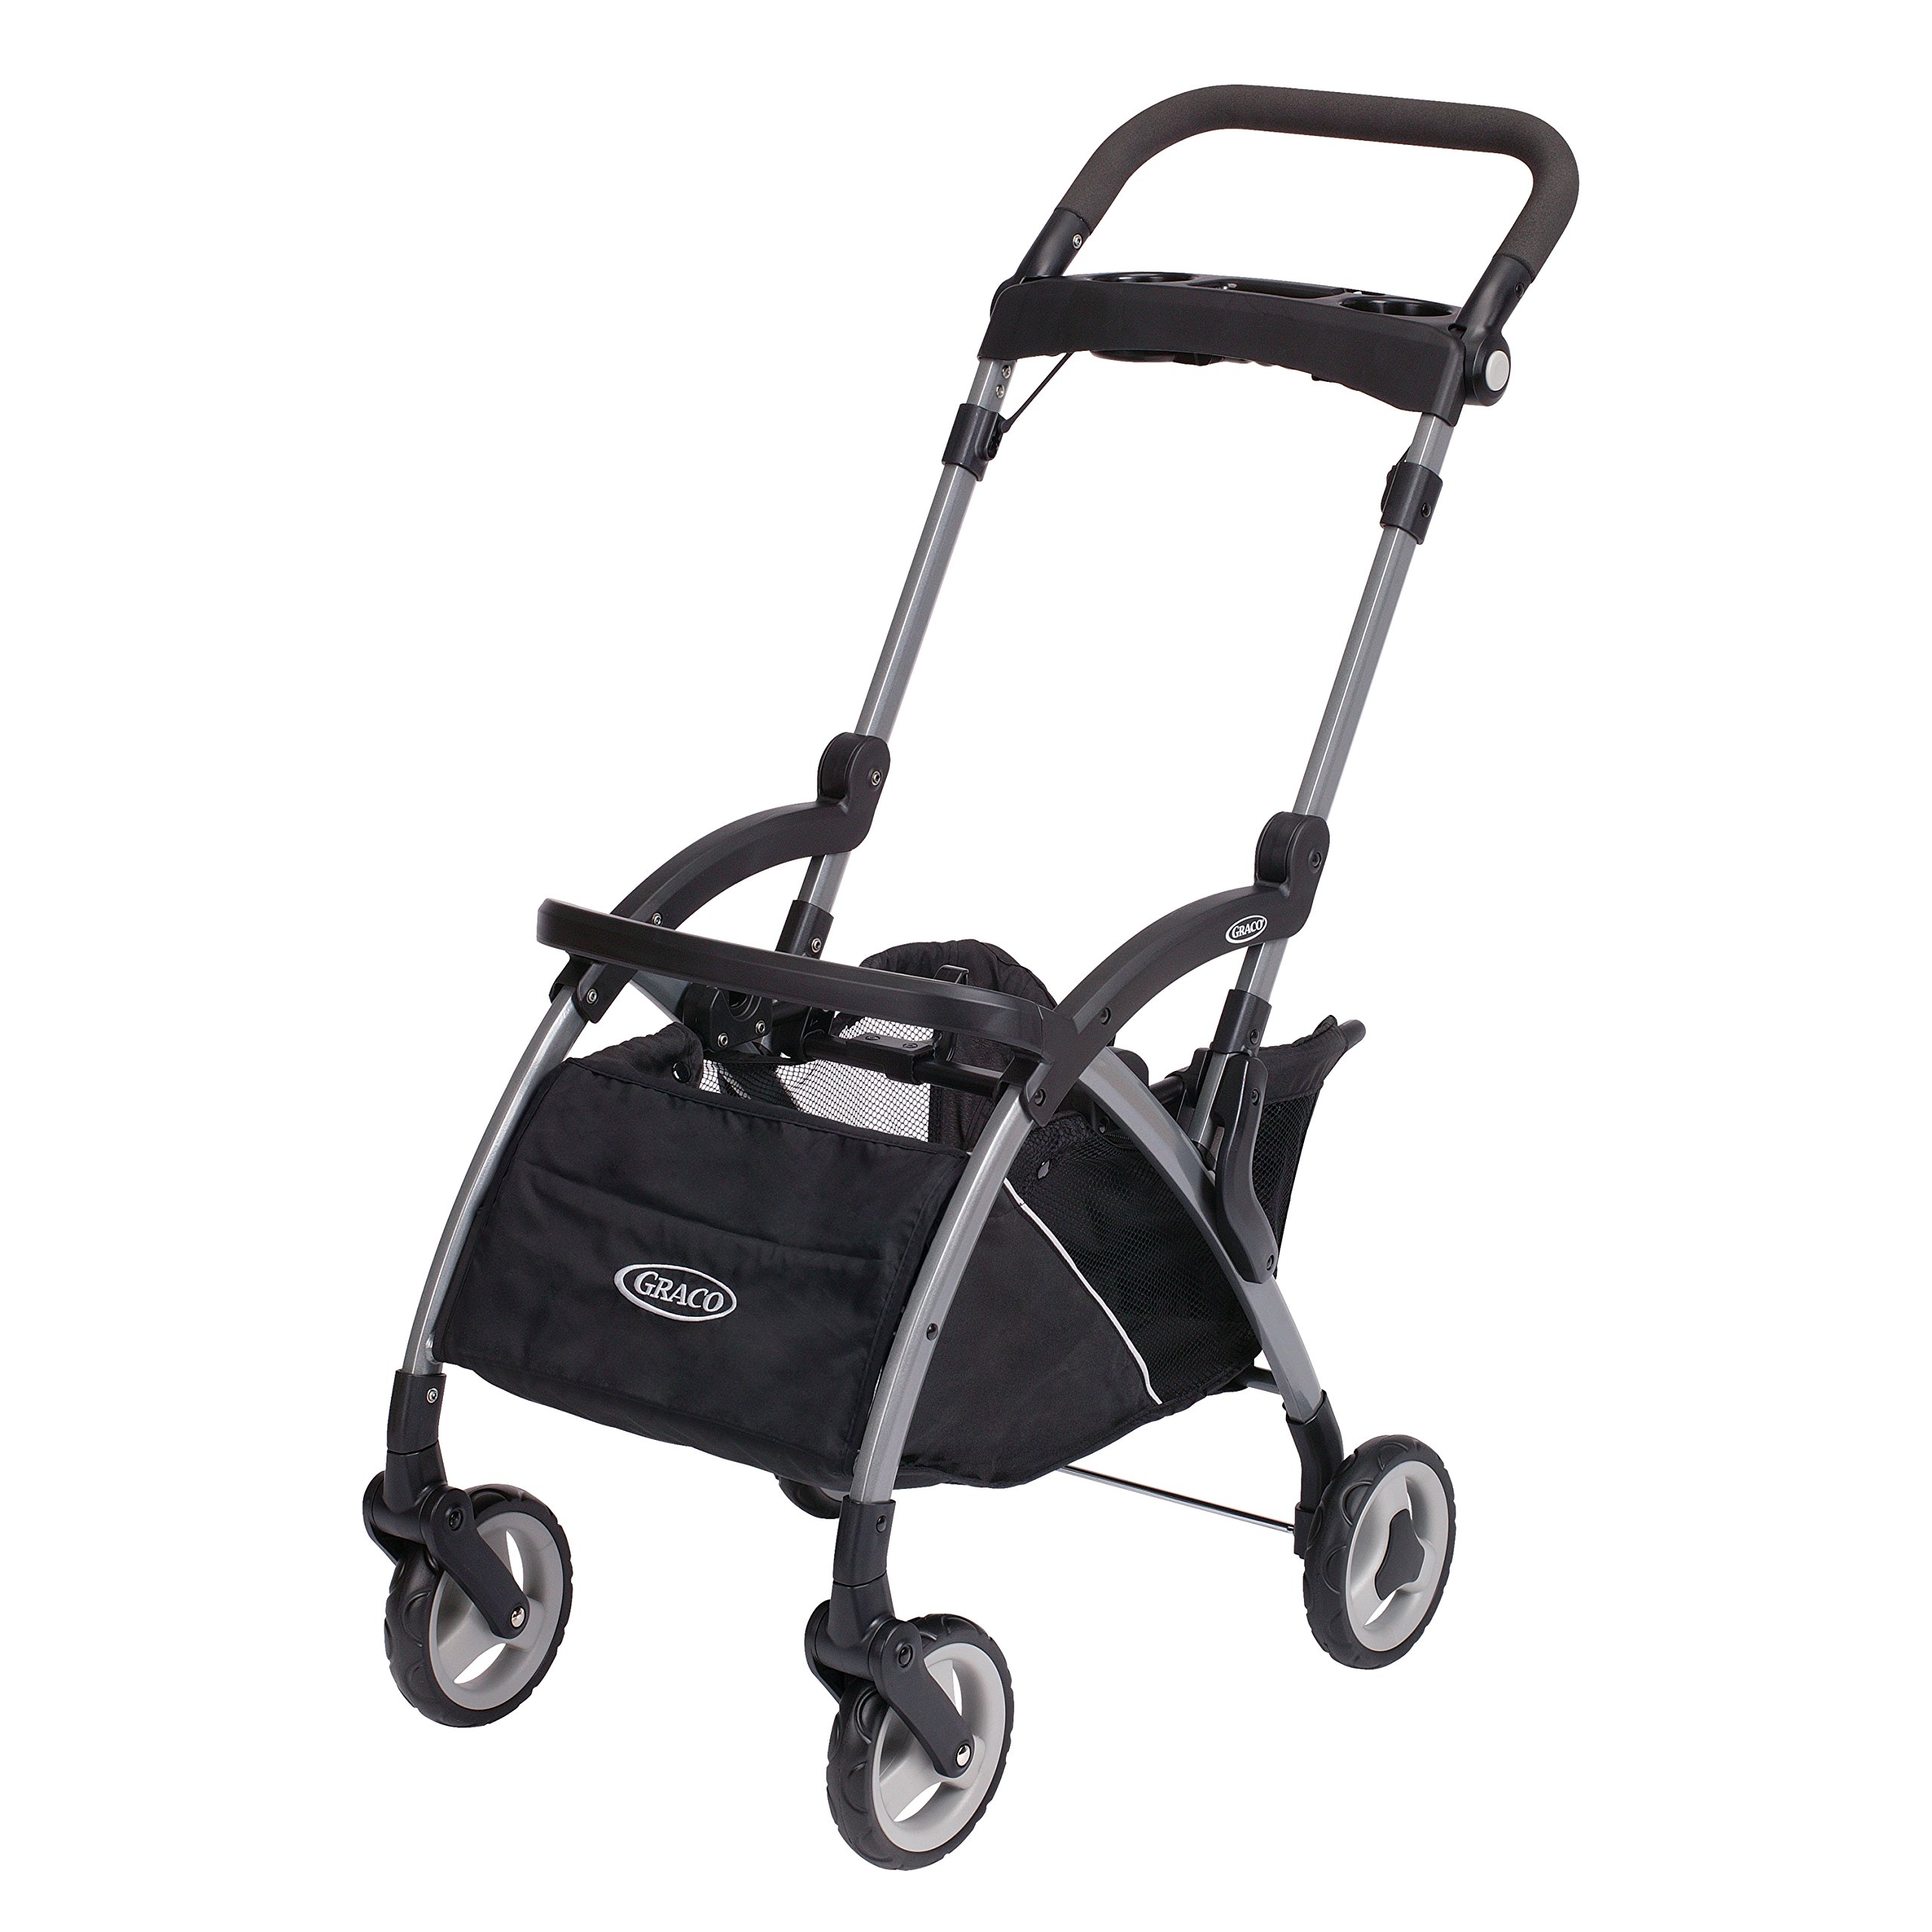 Graco SnugRider Elite Car Seat Carrier, Lightweight Frame, Travel Stroller Accepts any Graco Infant Car Seat, Black